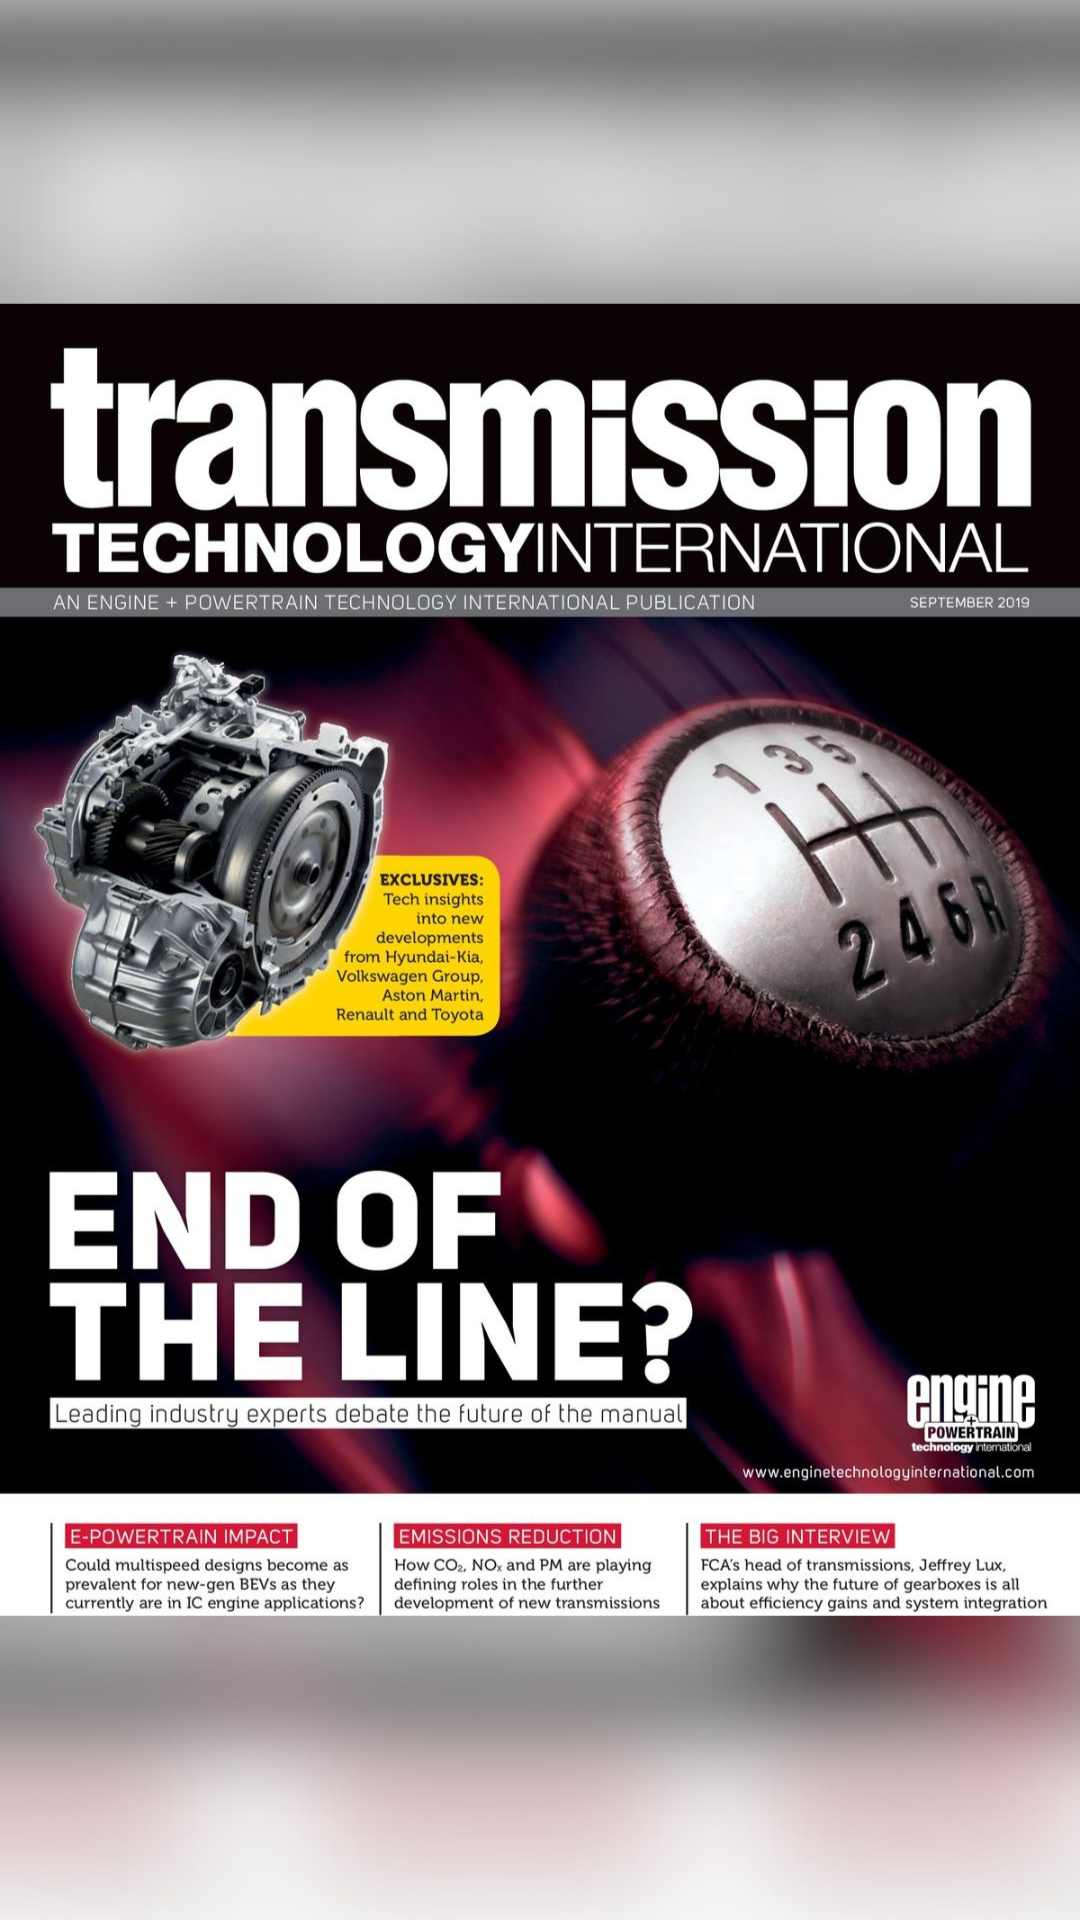 Front cover of transmission technology international magazine September 2019.